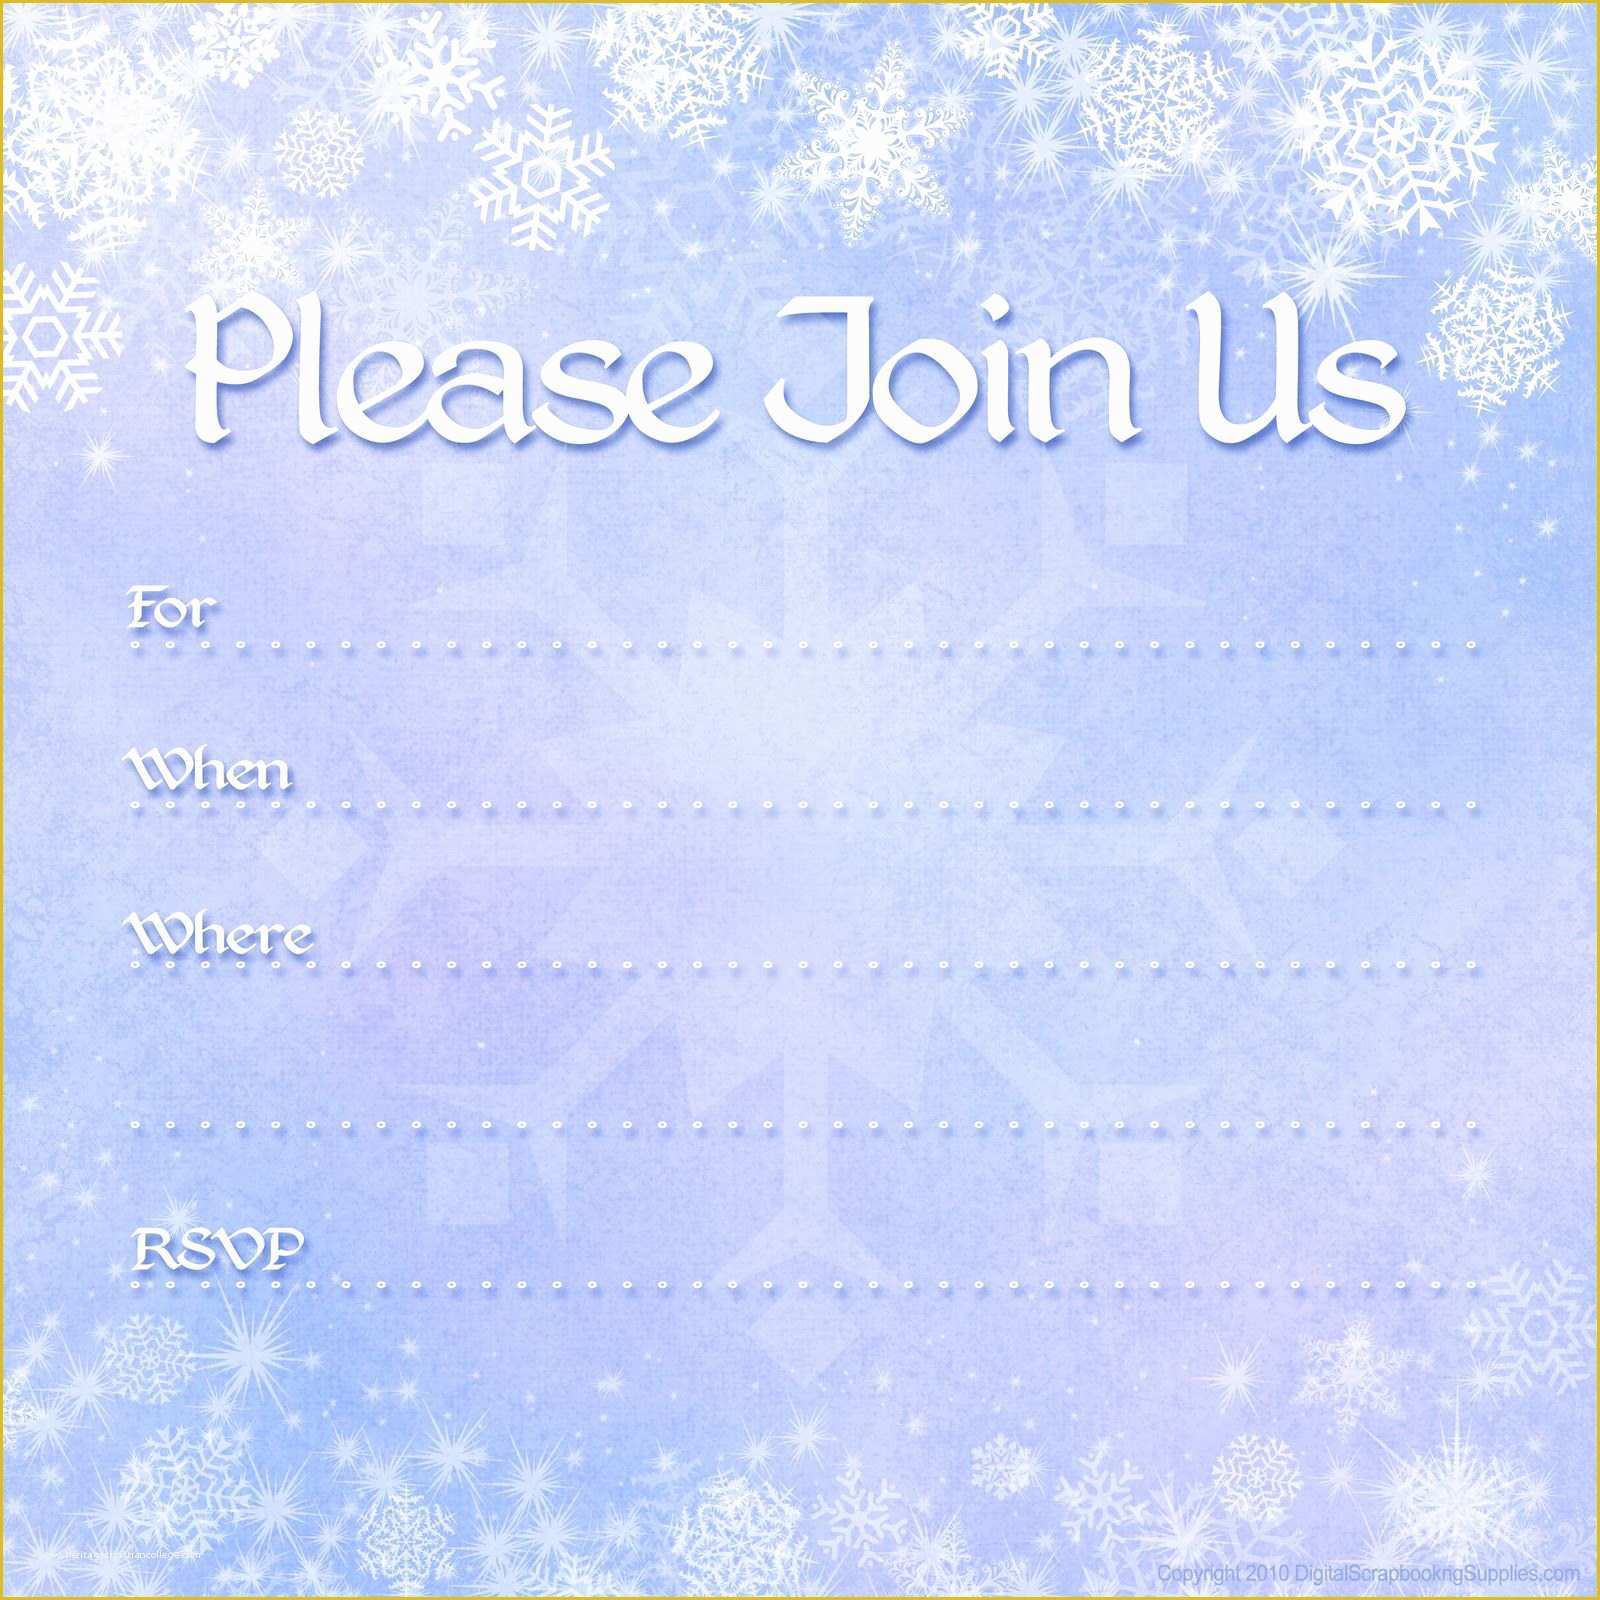 Free Winter Wonderland Invitations Templates Of event Invitation Holiday Invitation Cards Card